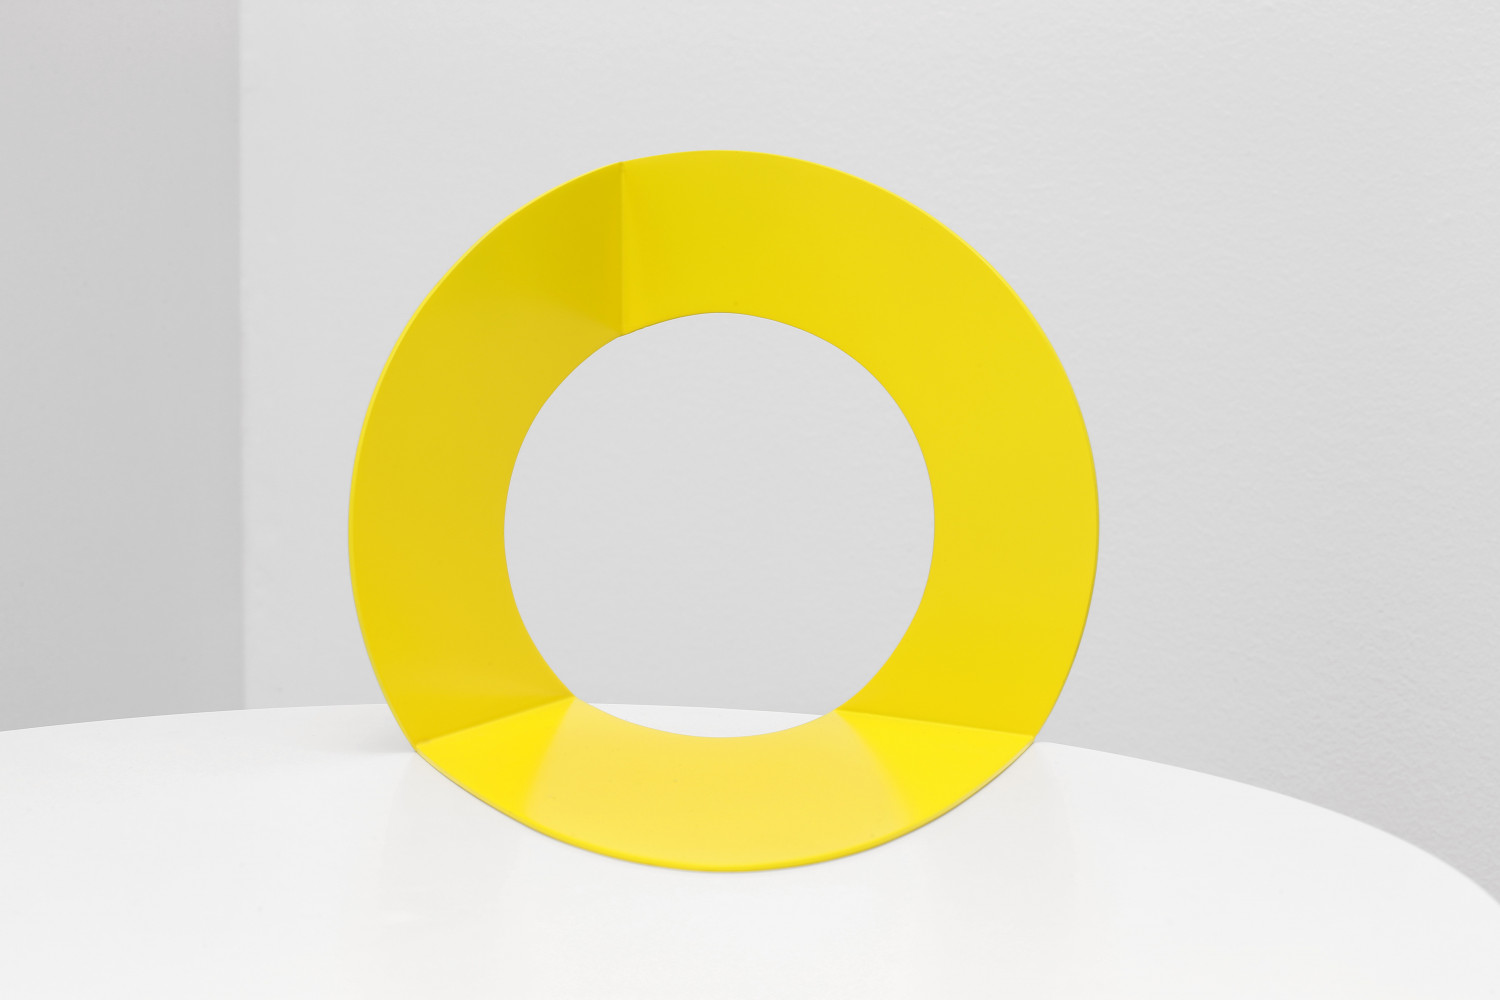 Felice Varini, ‘Cercle jaune’, 0013–2013